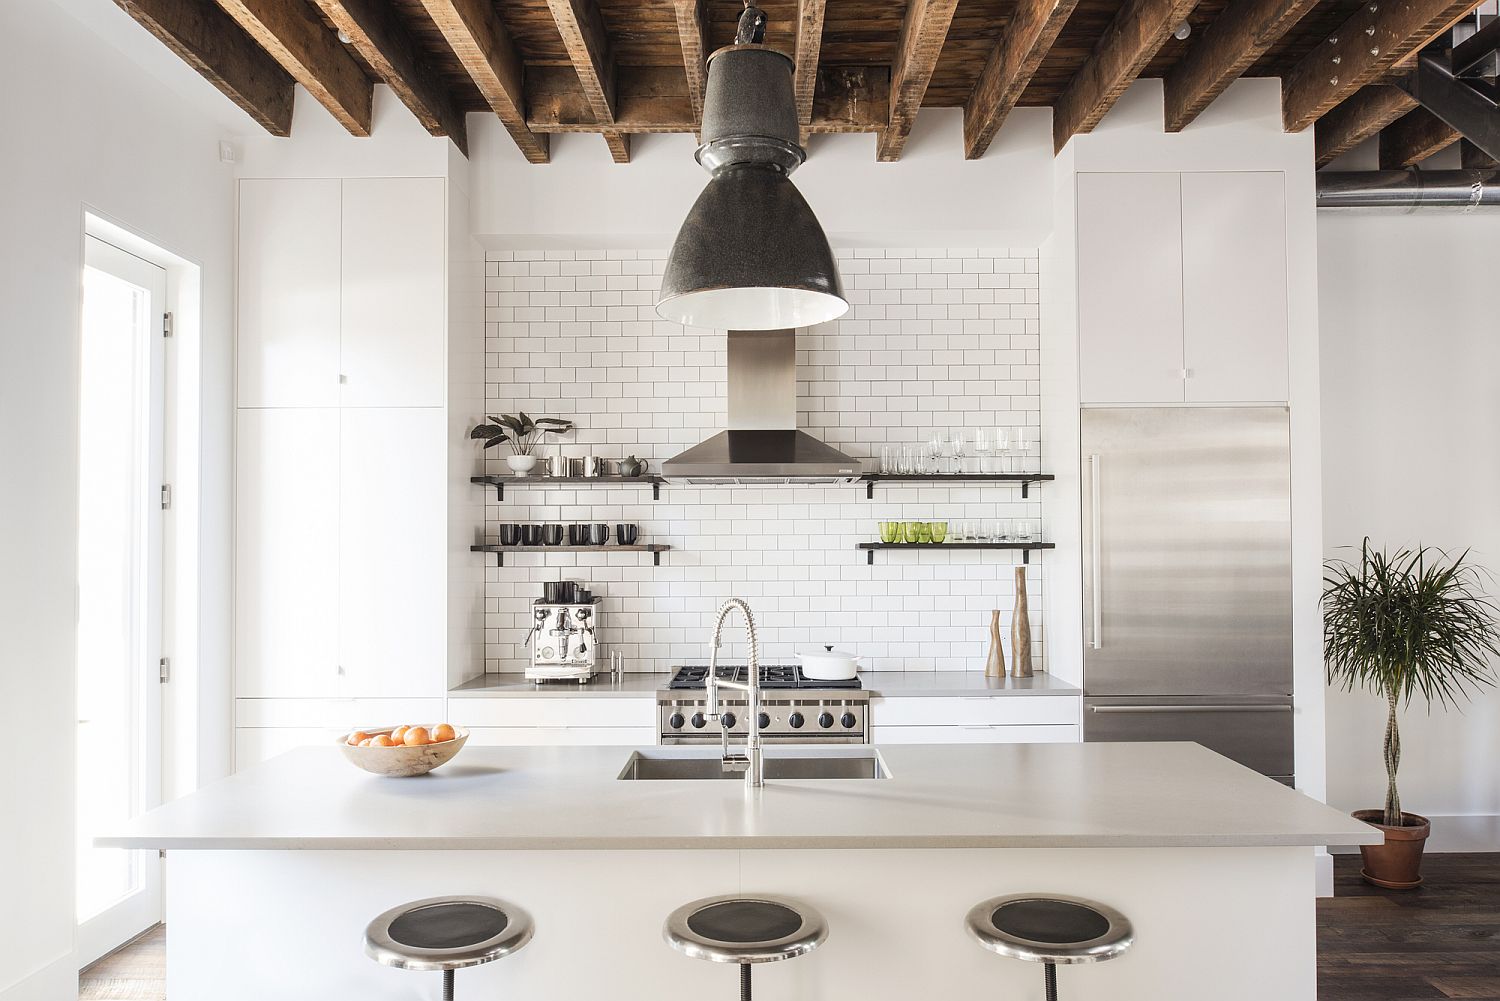 Oversized-pendant-light-brings-industrial-elegance-to-the-modern-kitchen